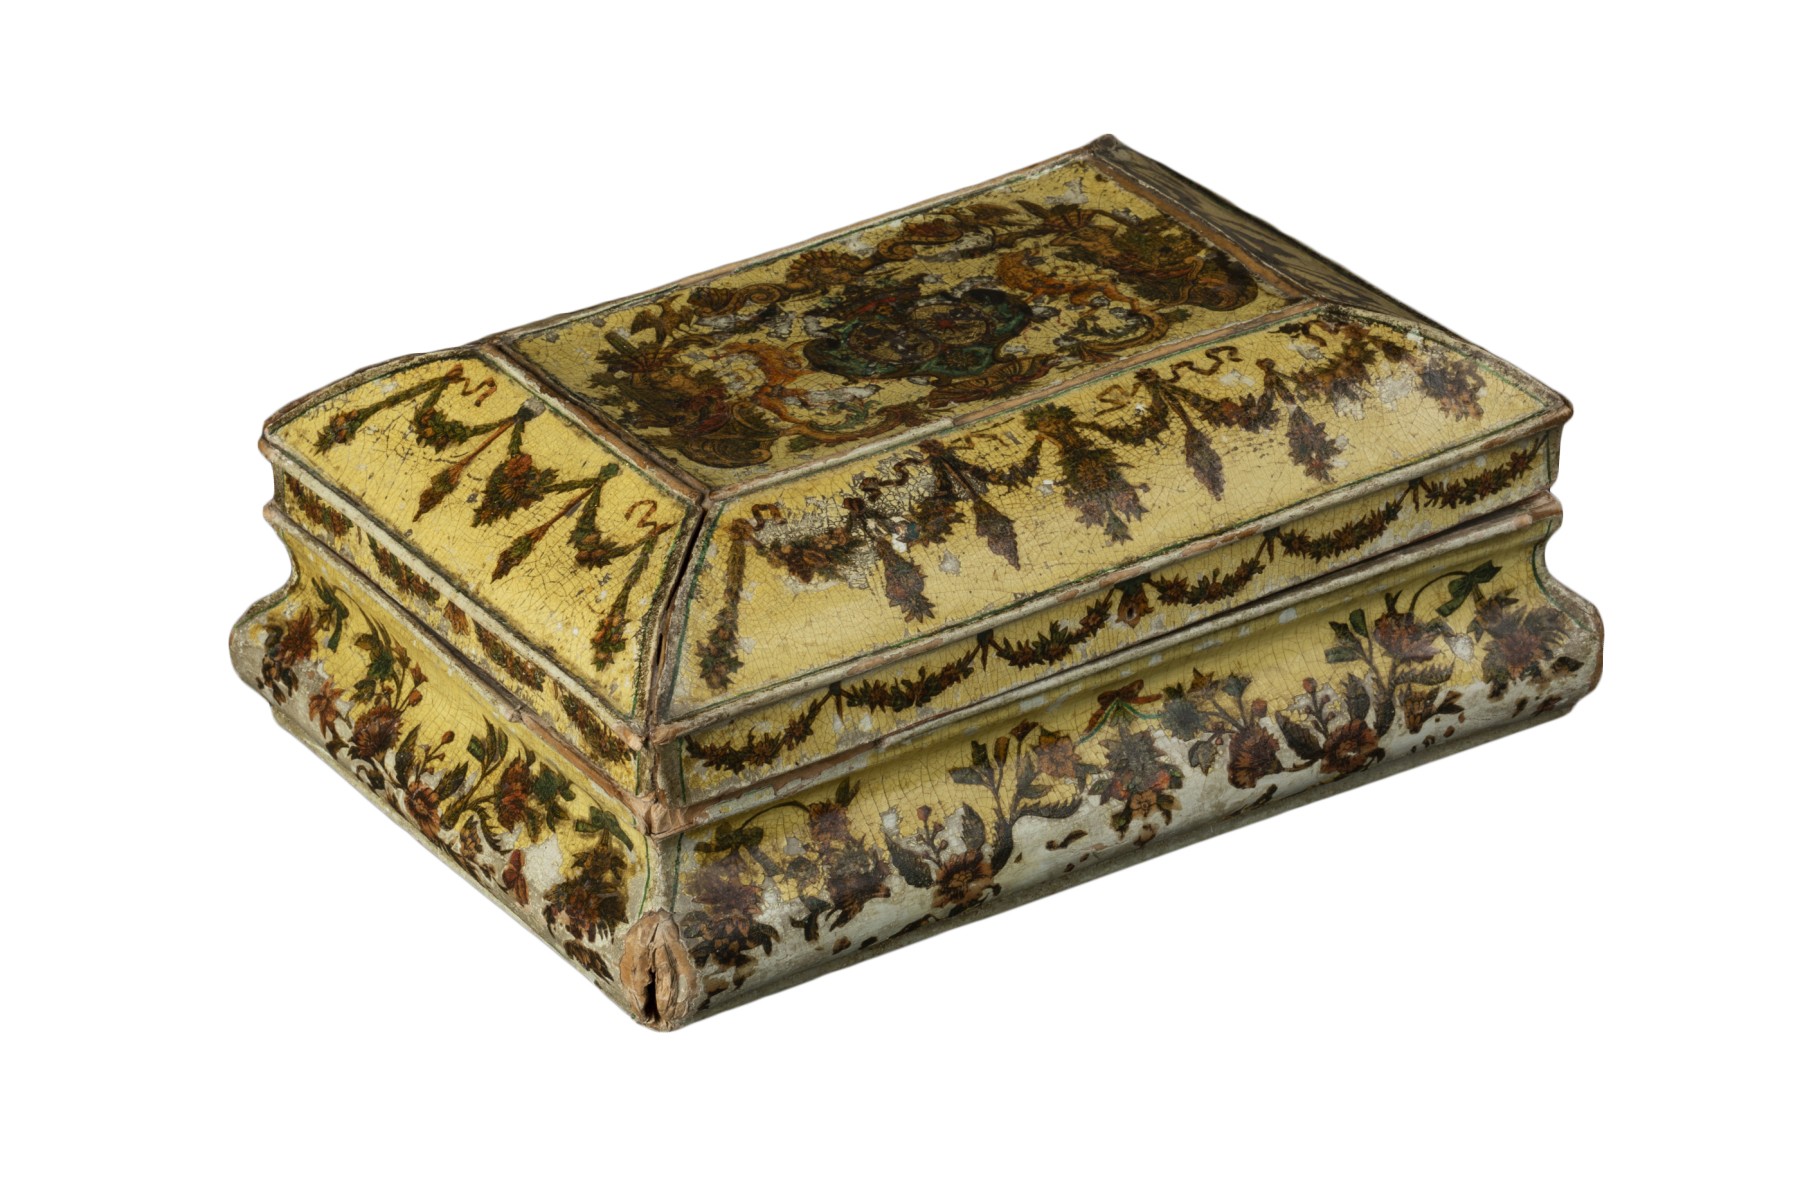 Cartapesta writing box - Italy 18th century - Ref.77802